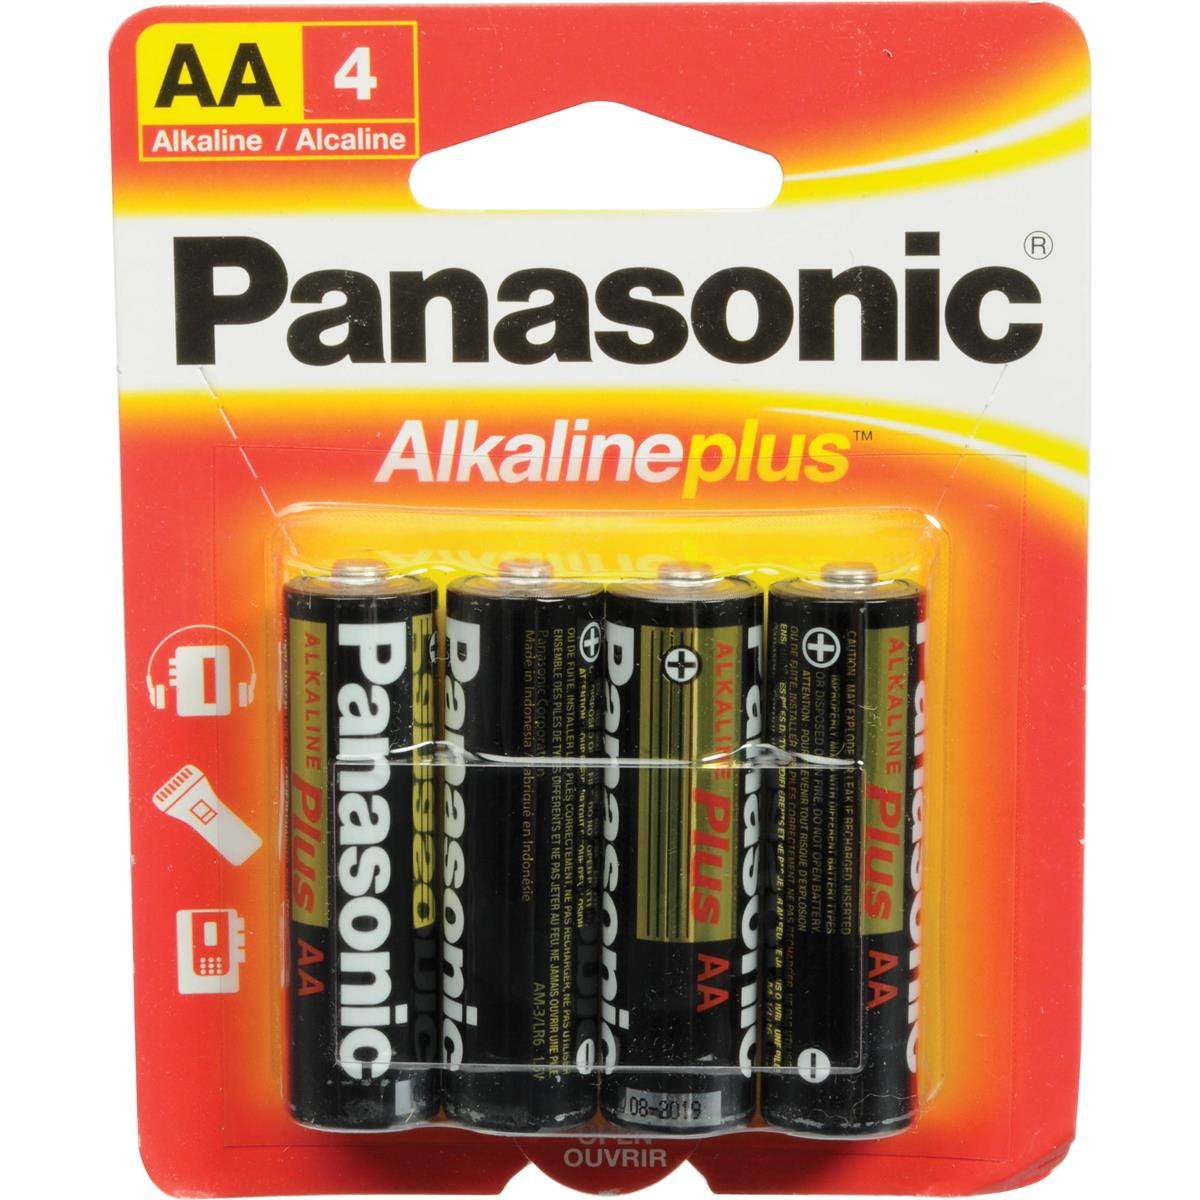 Image of Panasonic AA 1.5V Alkaline Plus General Purpose Battery